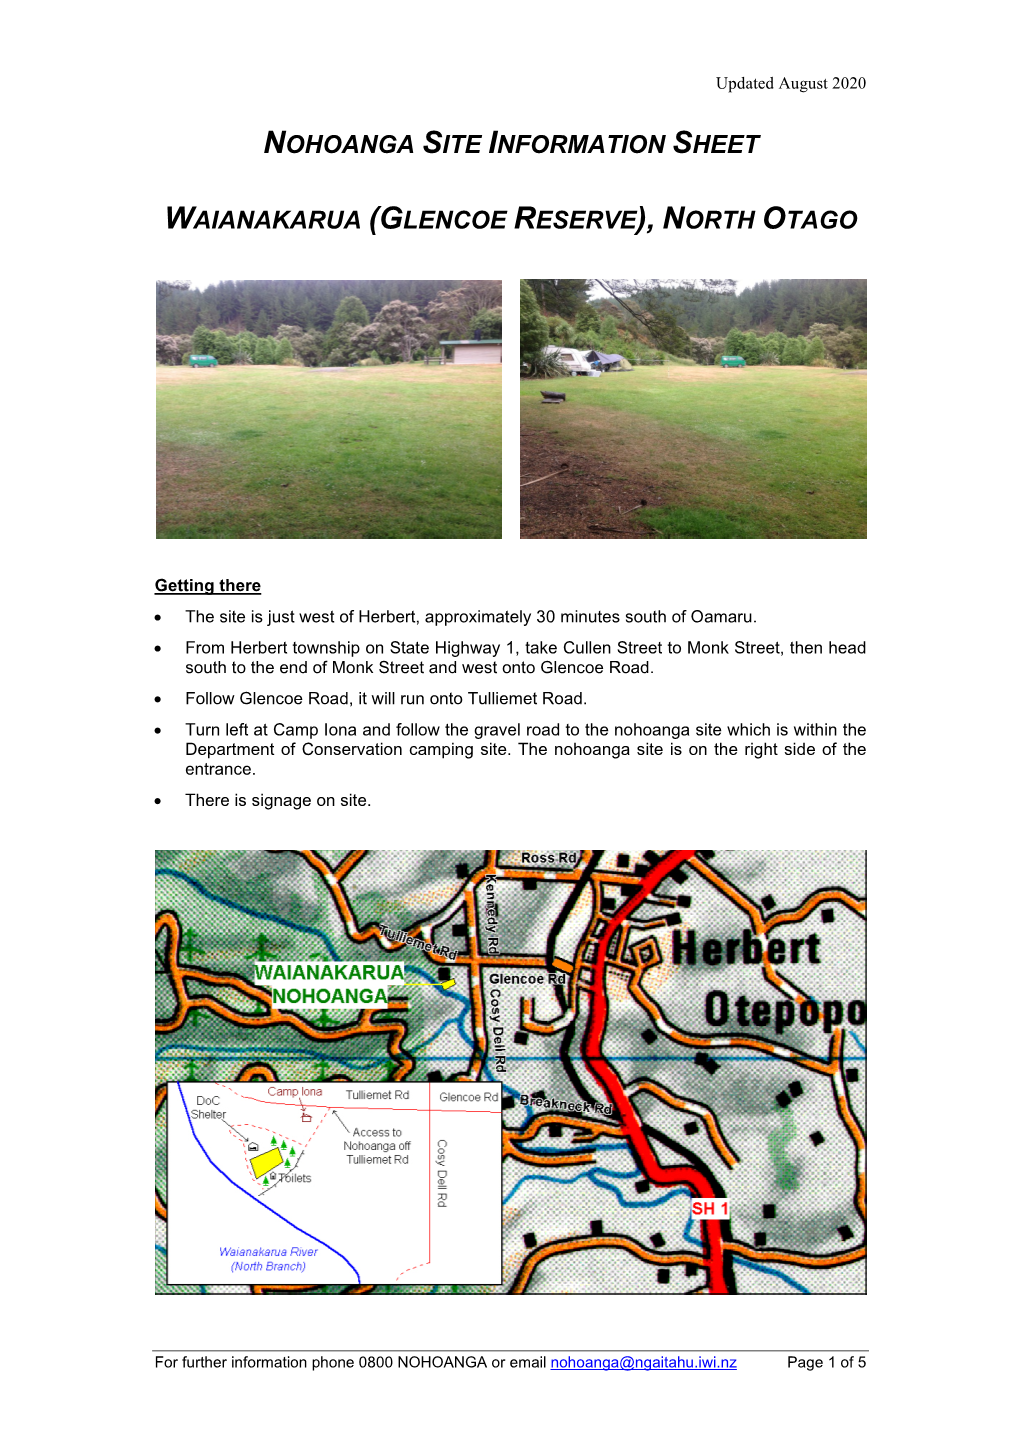 Nohoanga Site Information Sheet Waianakarua (Glencoe Reserve)